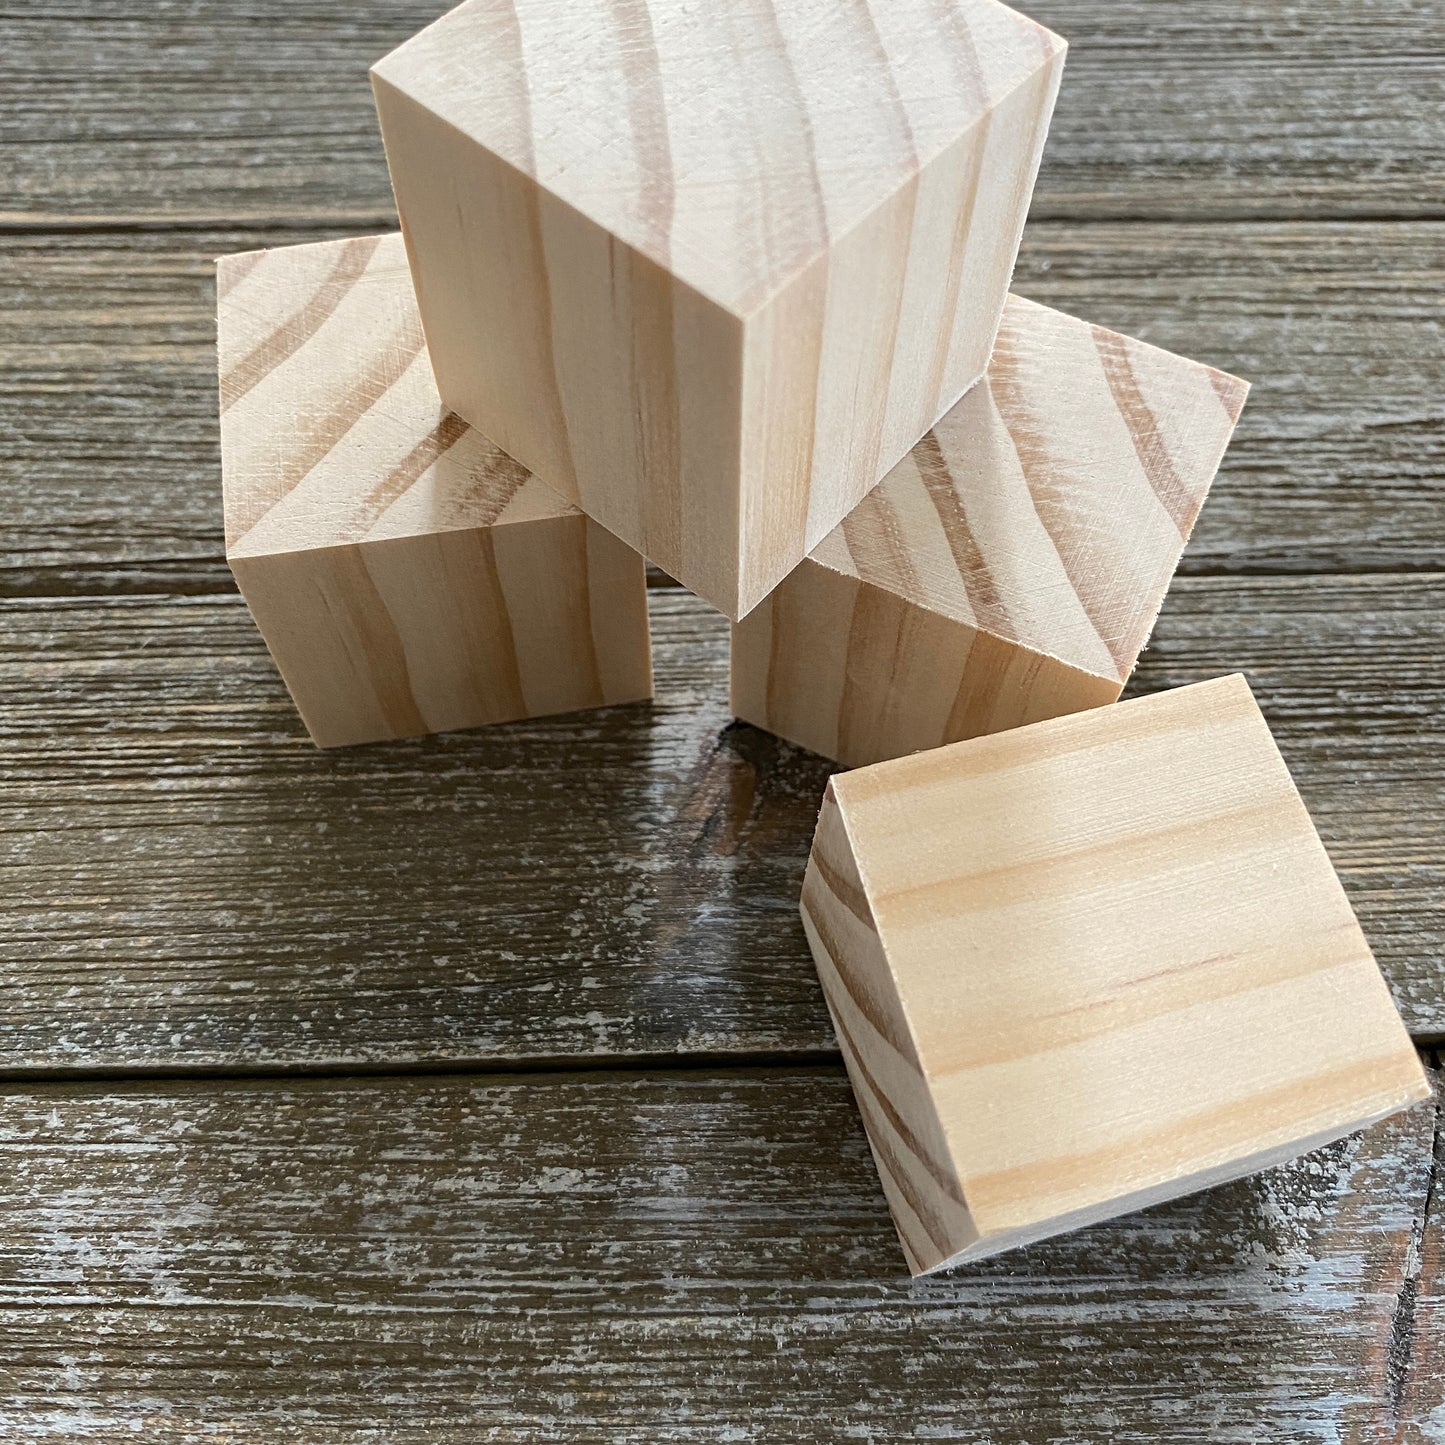 Unfinished Wood Blocks for Crafts - 8 pc set